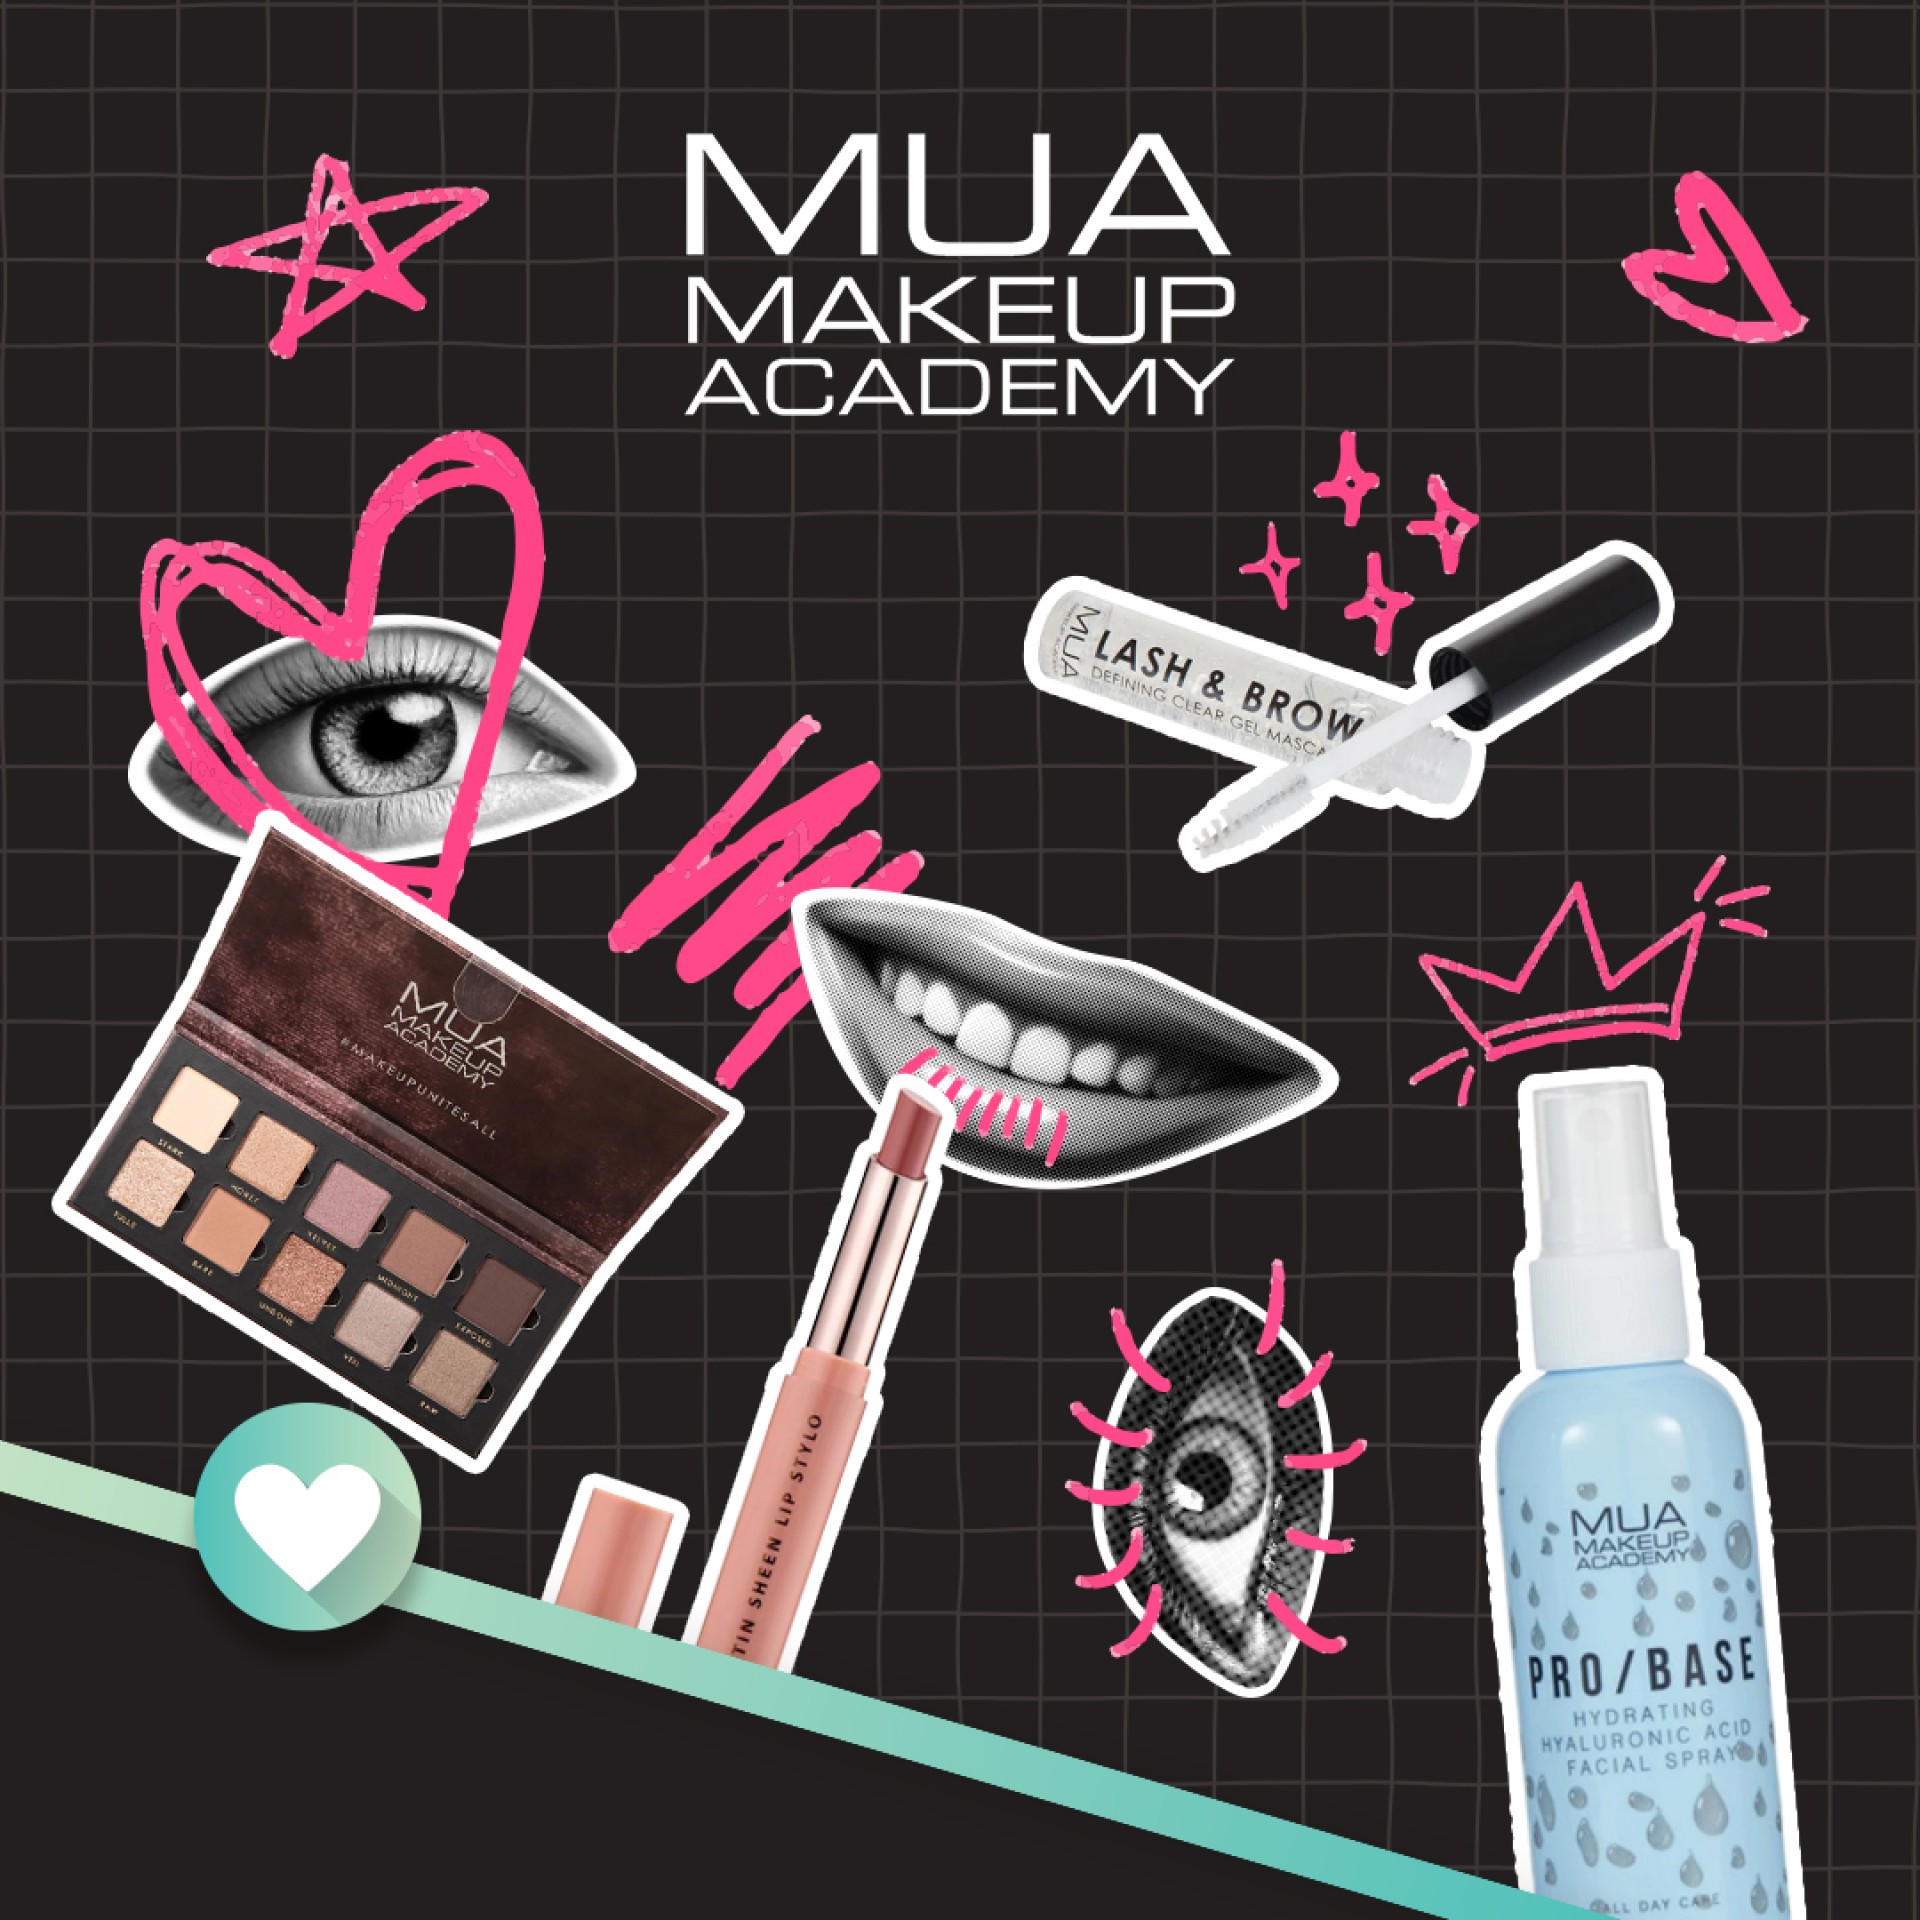 Mua cosmetics, προϊόντα ομορφιάς και καλλυντικά